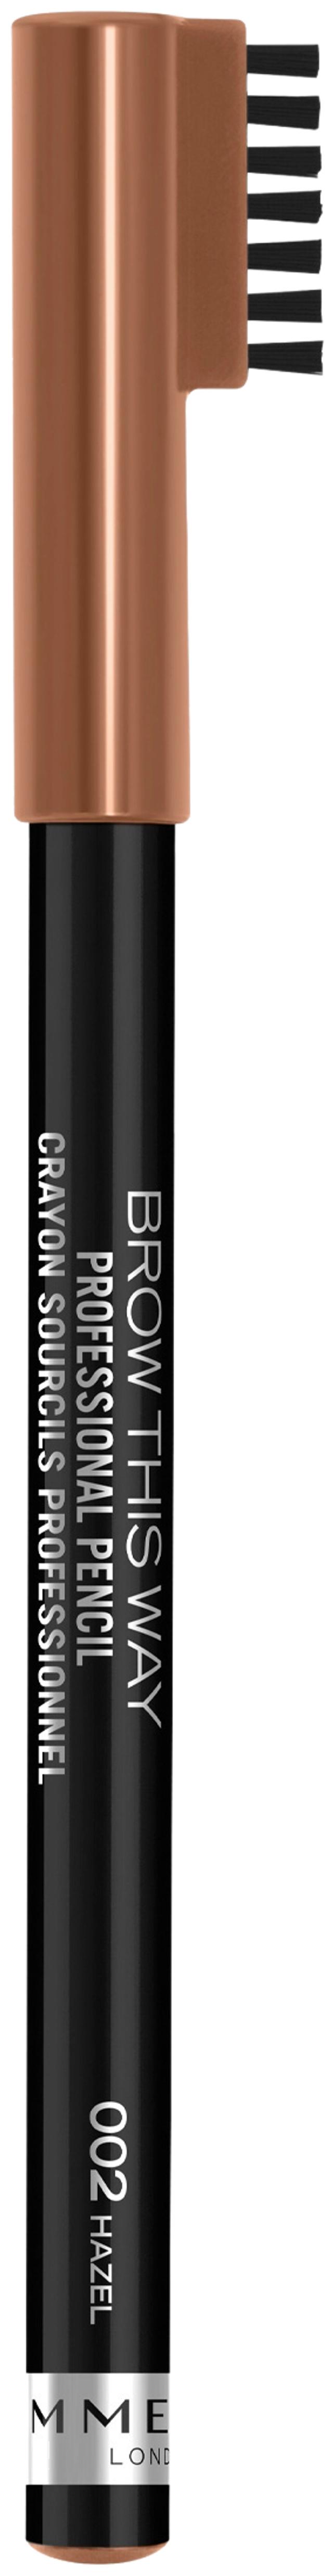 Rimmel 1,4g Professional Eyebrow Pencil 002 Hazel kulmakynä